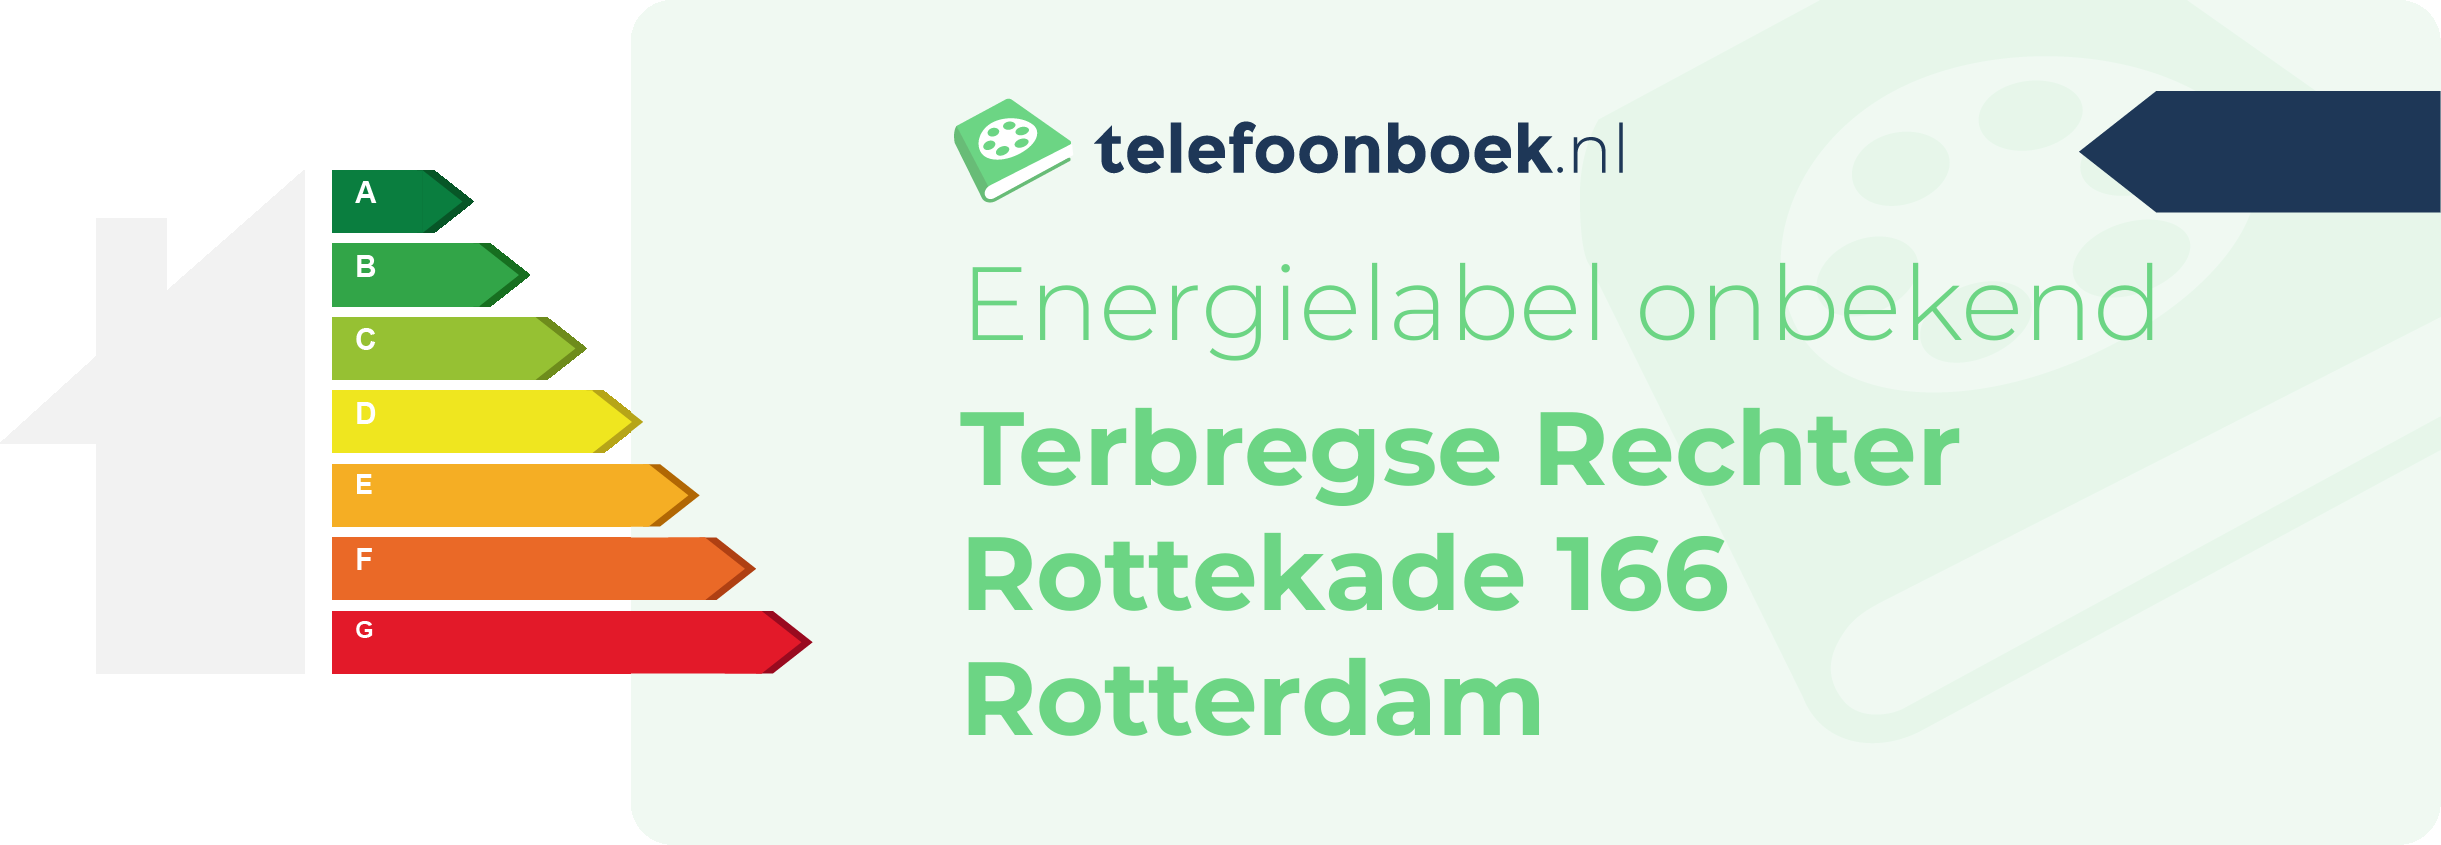 Energielabel Terbregse Rechter Rottekade 166 Rotterdam